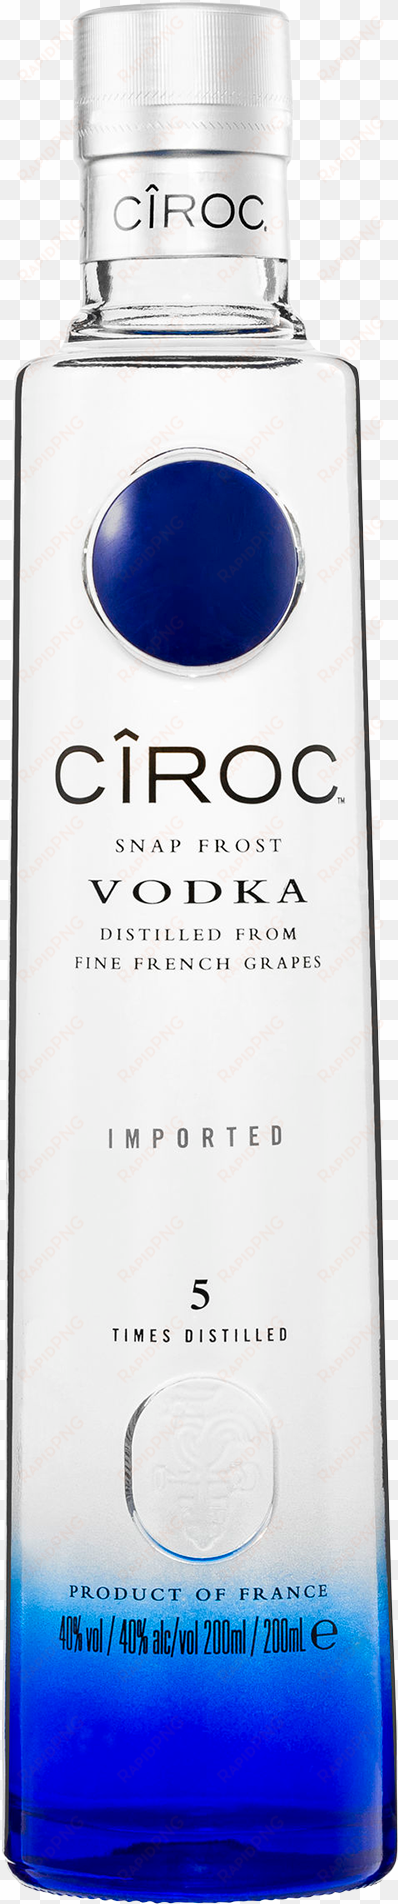 cîroc vodka 200ml - ciroc